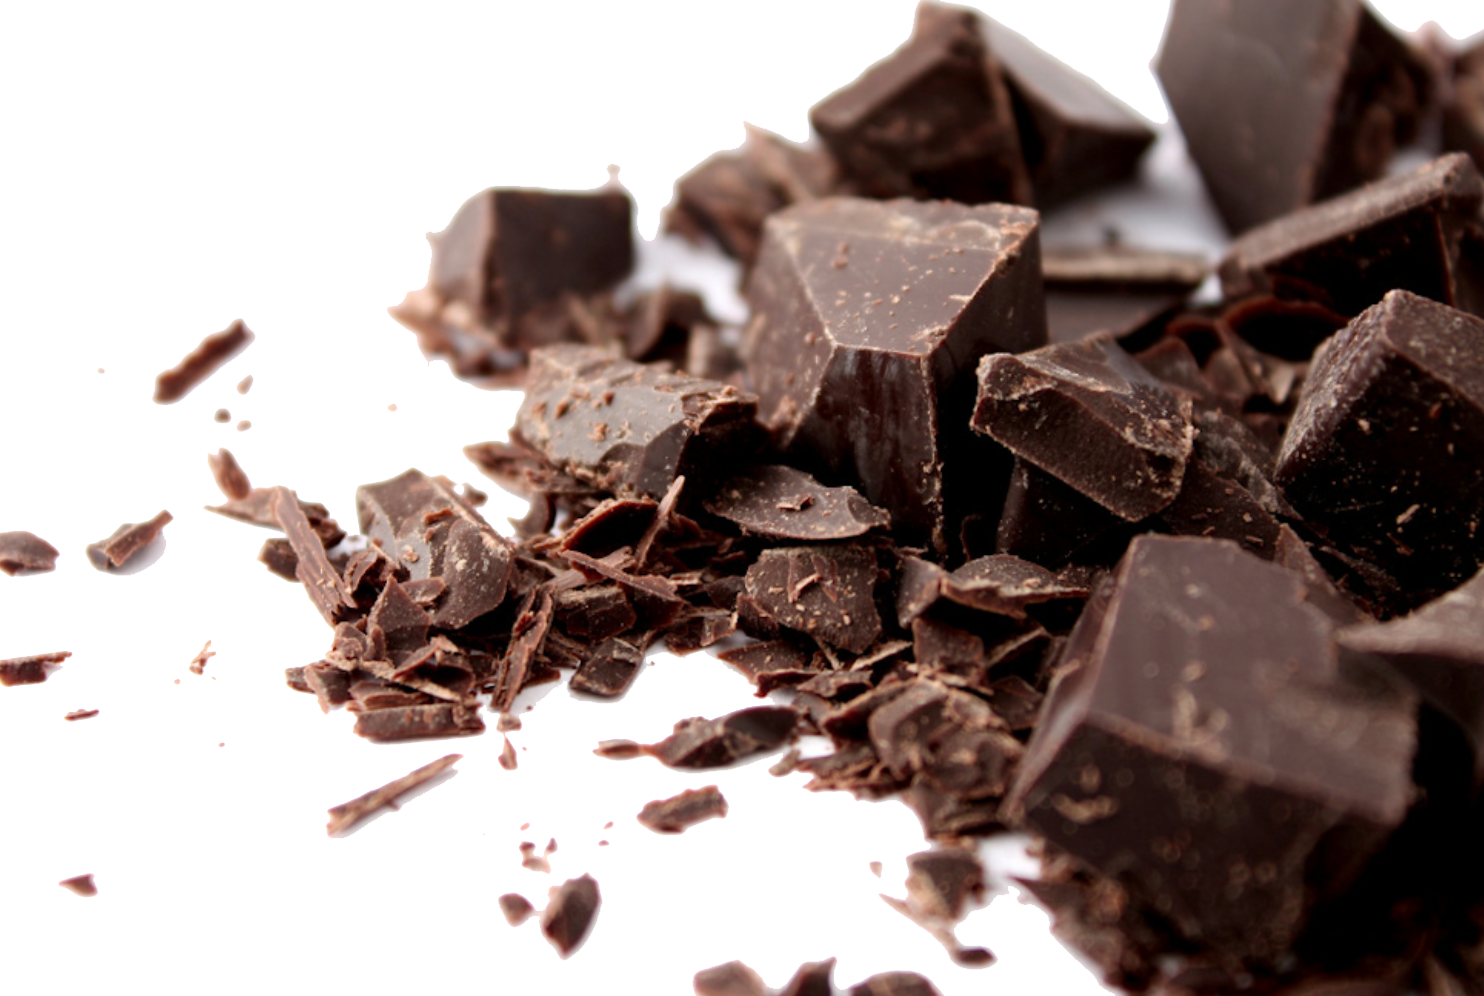 Chocolate bar PNG image